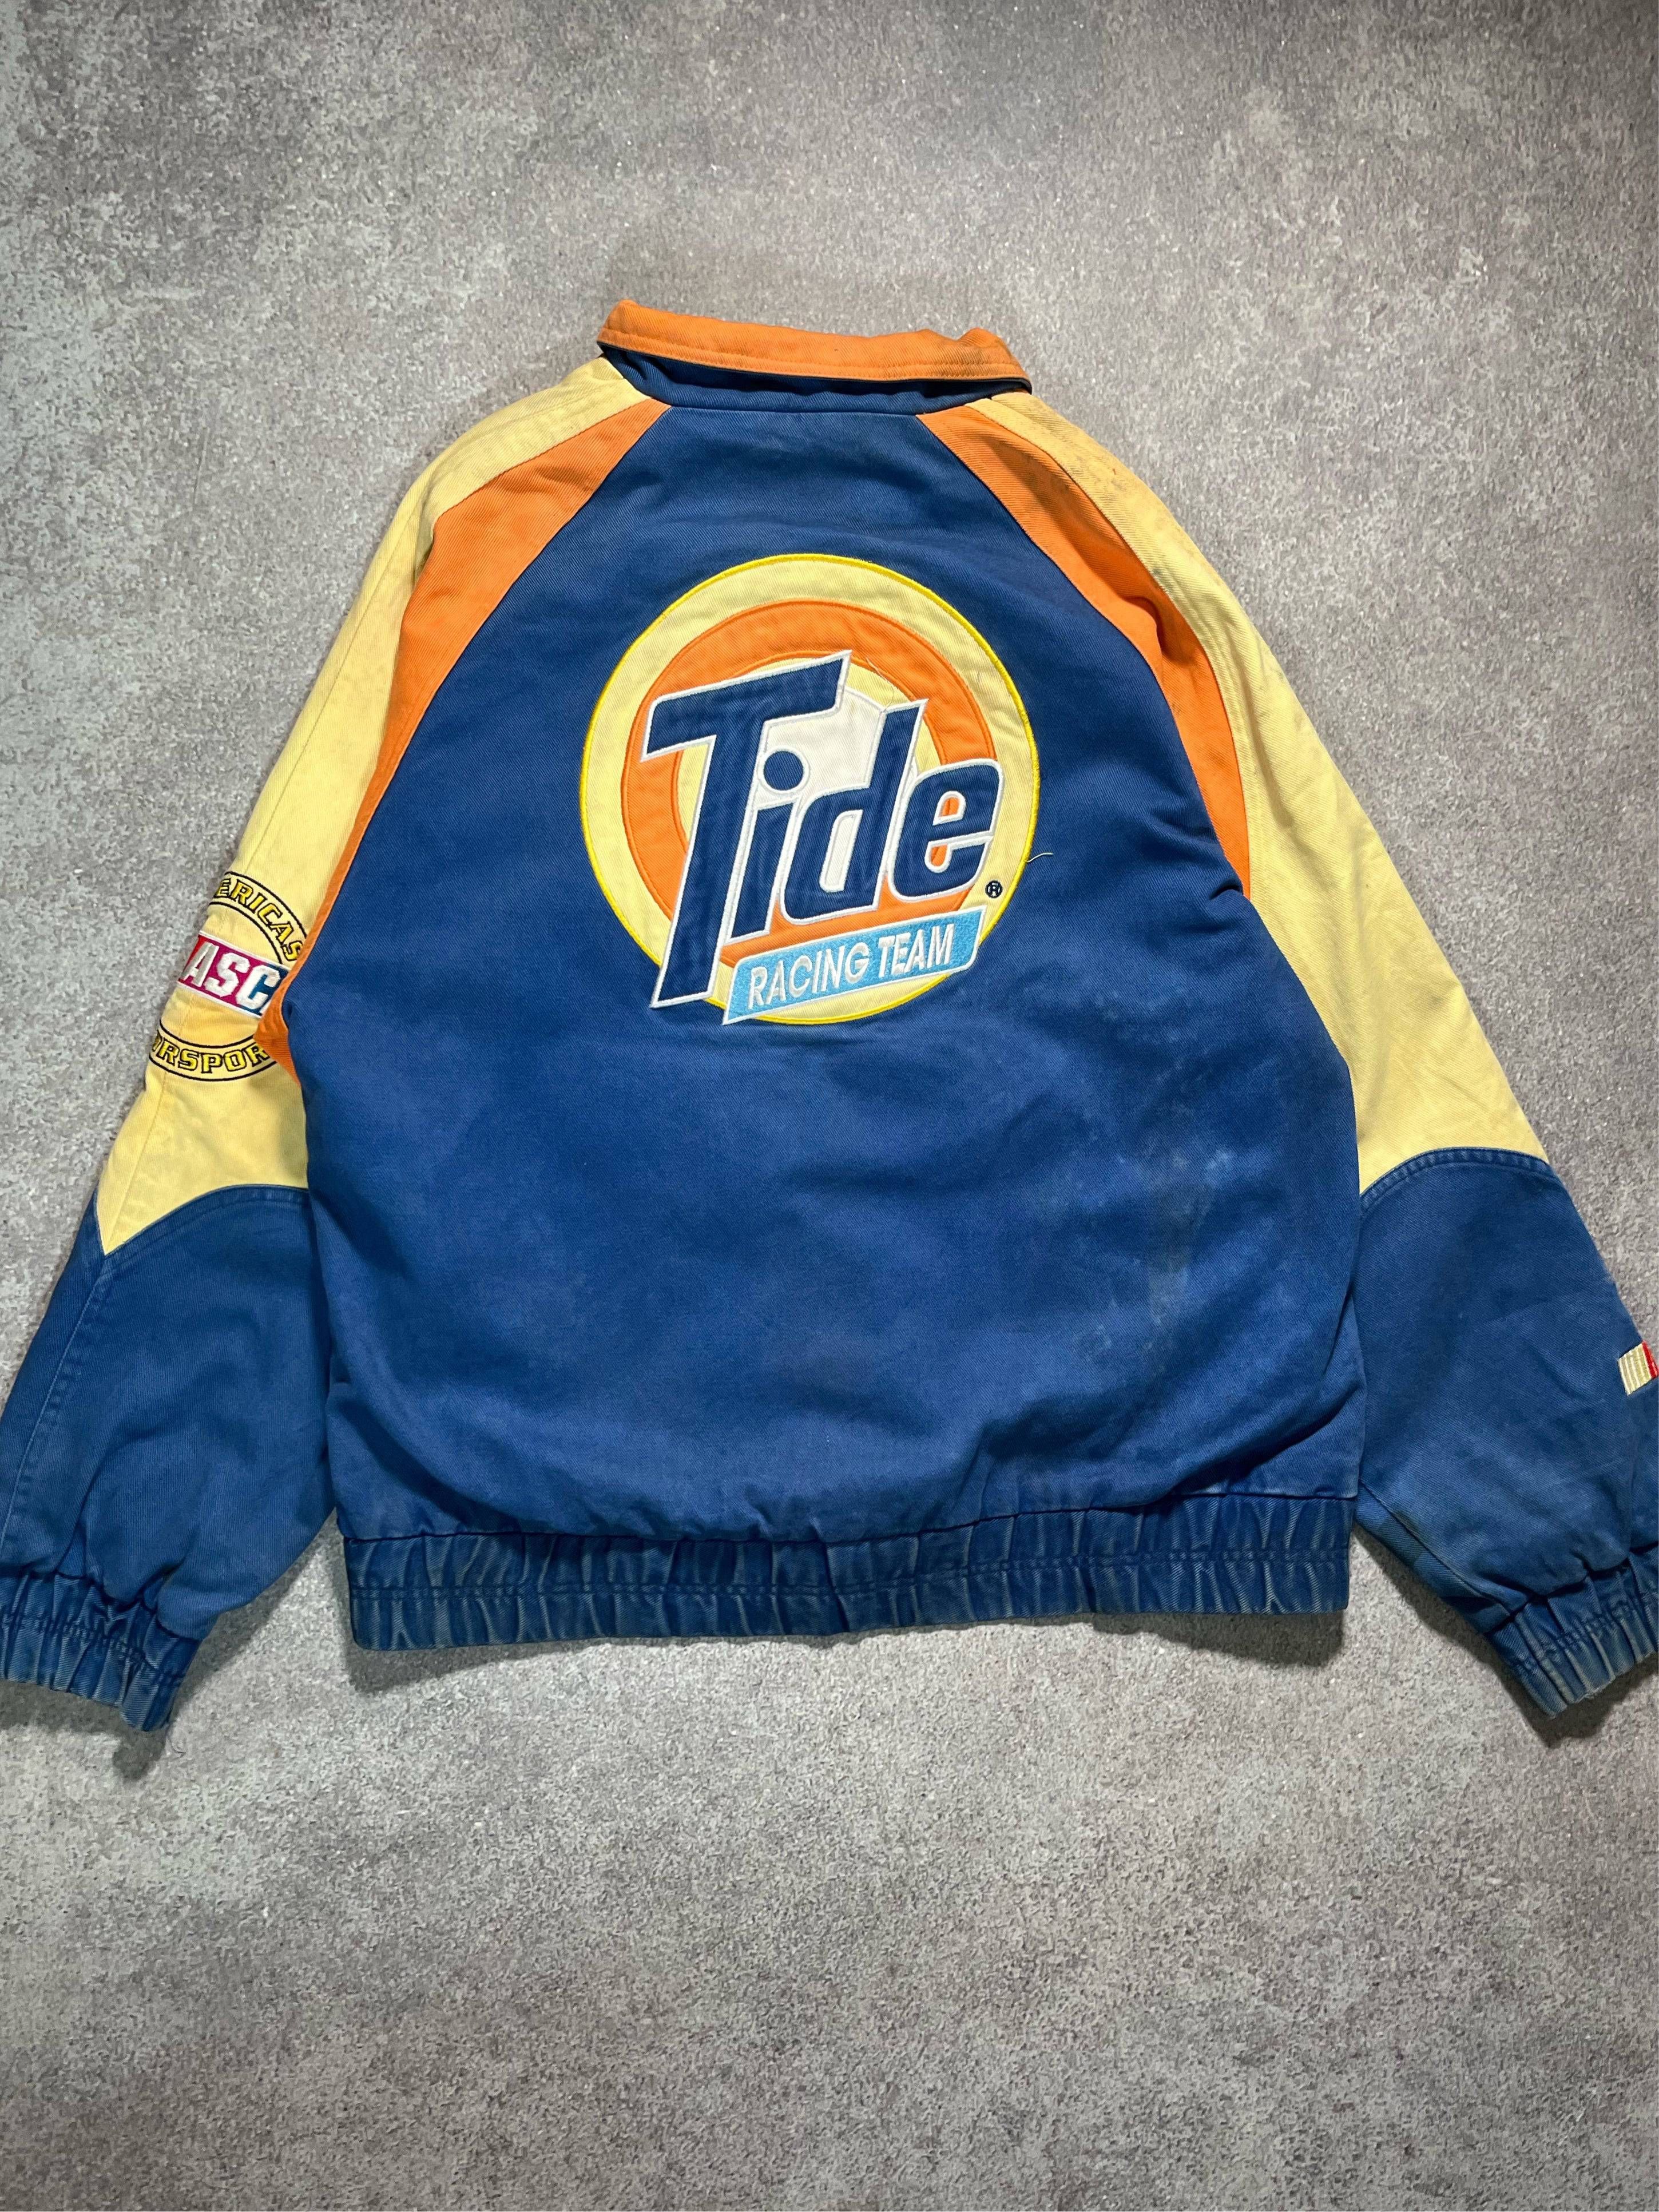 Racing Jacket Tide Multicolor // Medium - RHAGHOUSE VINTAGE